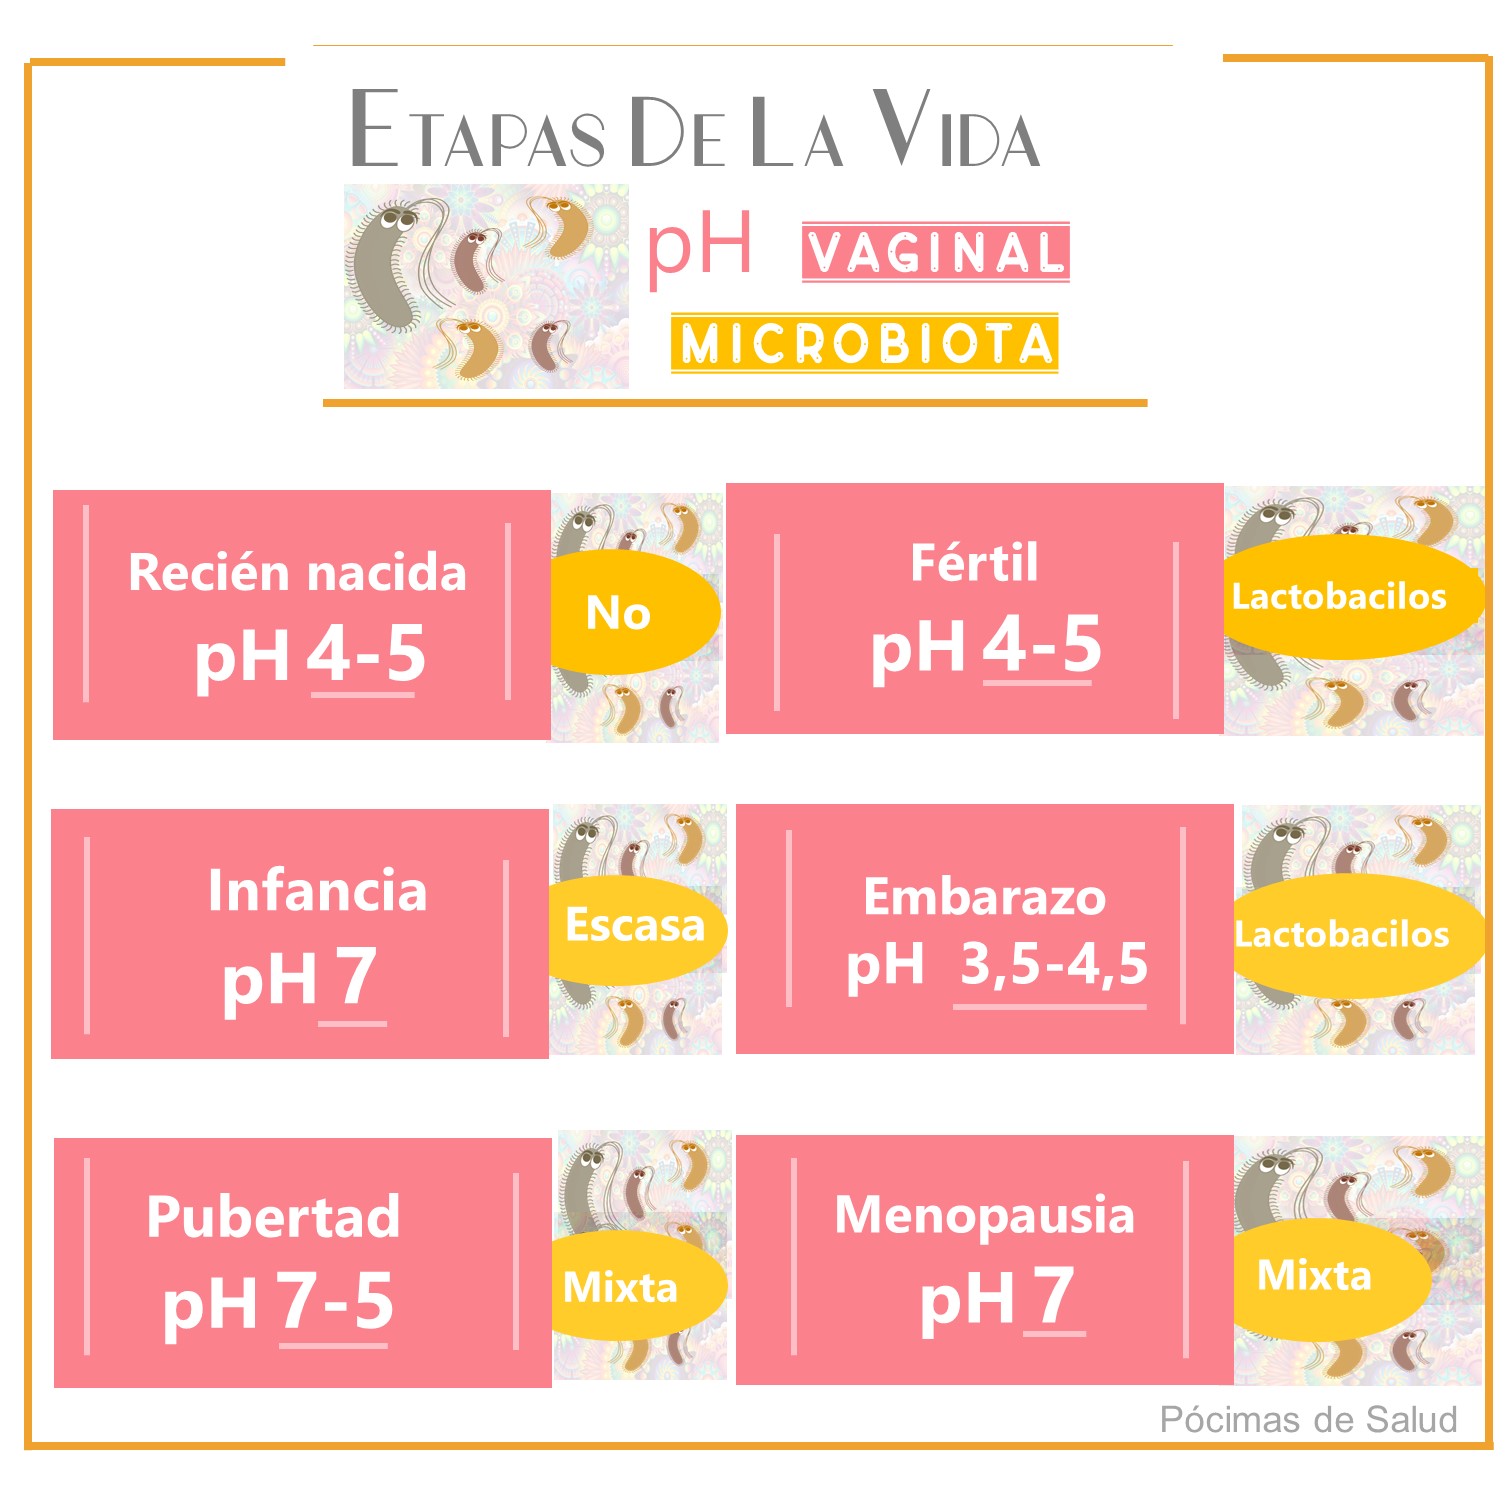 Etapas-vida-ph-vaginal-microbiota